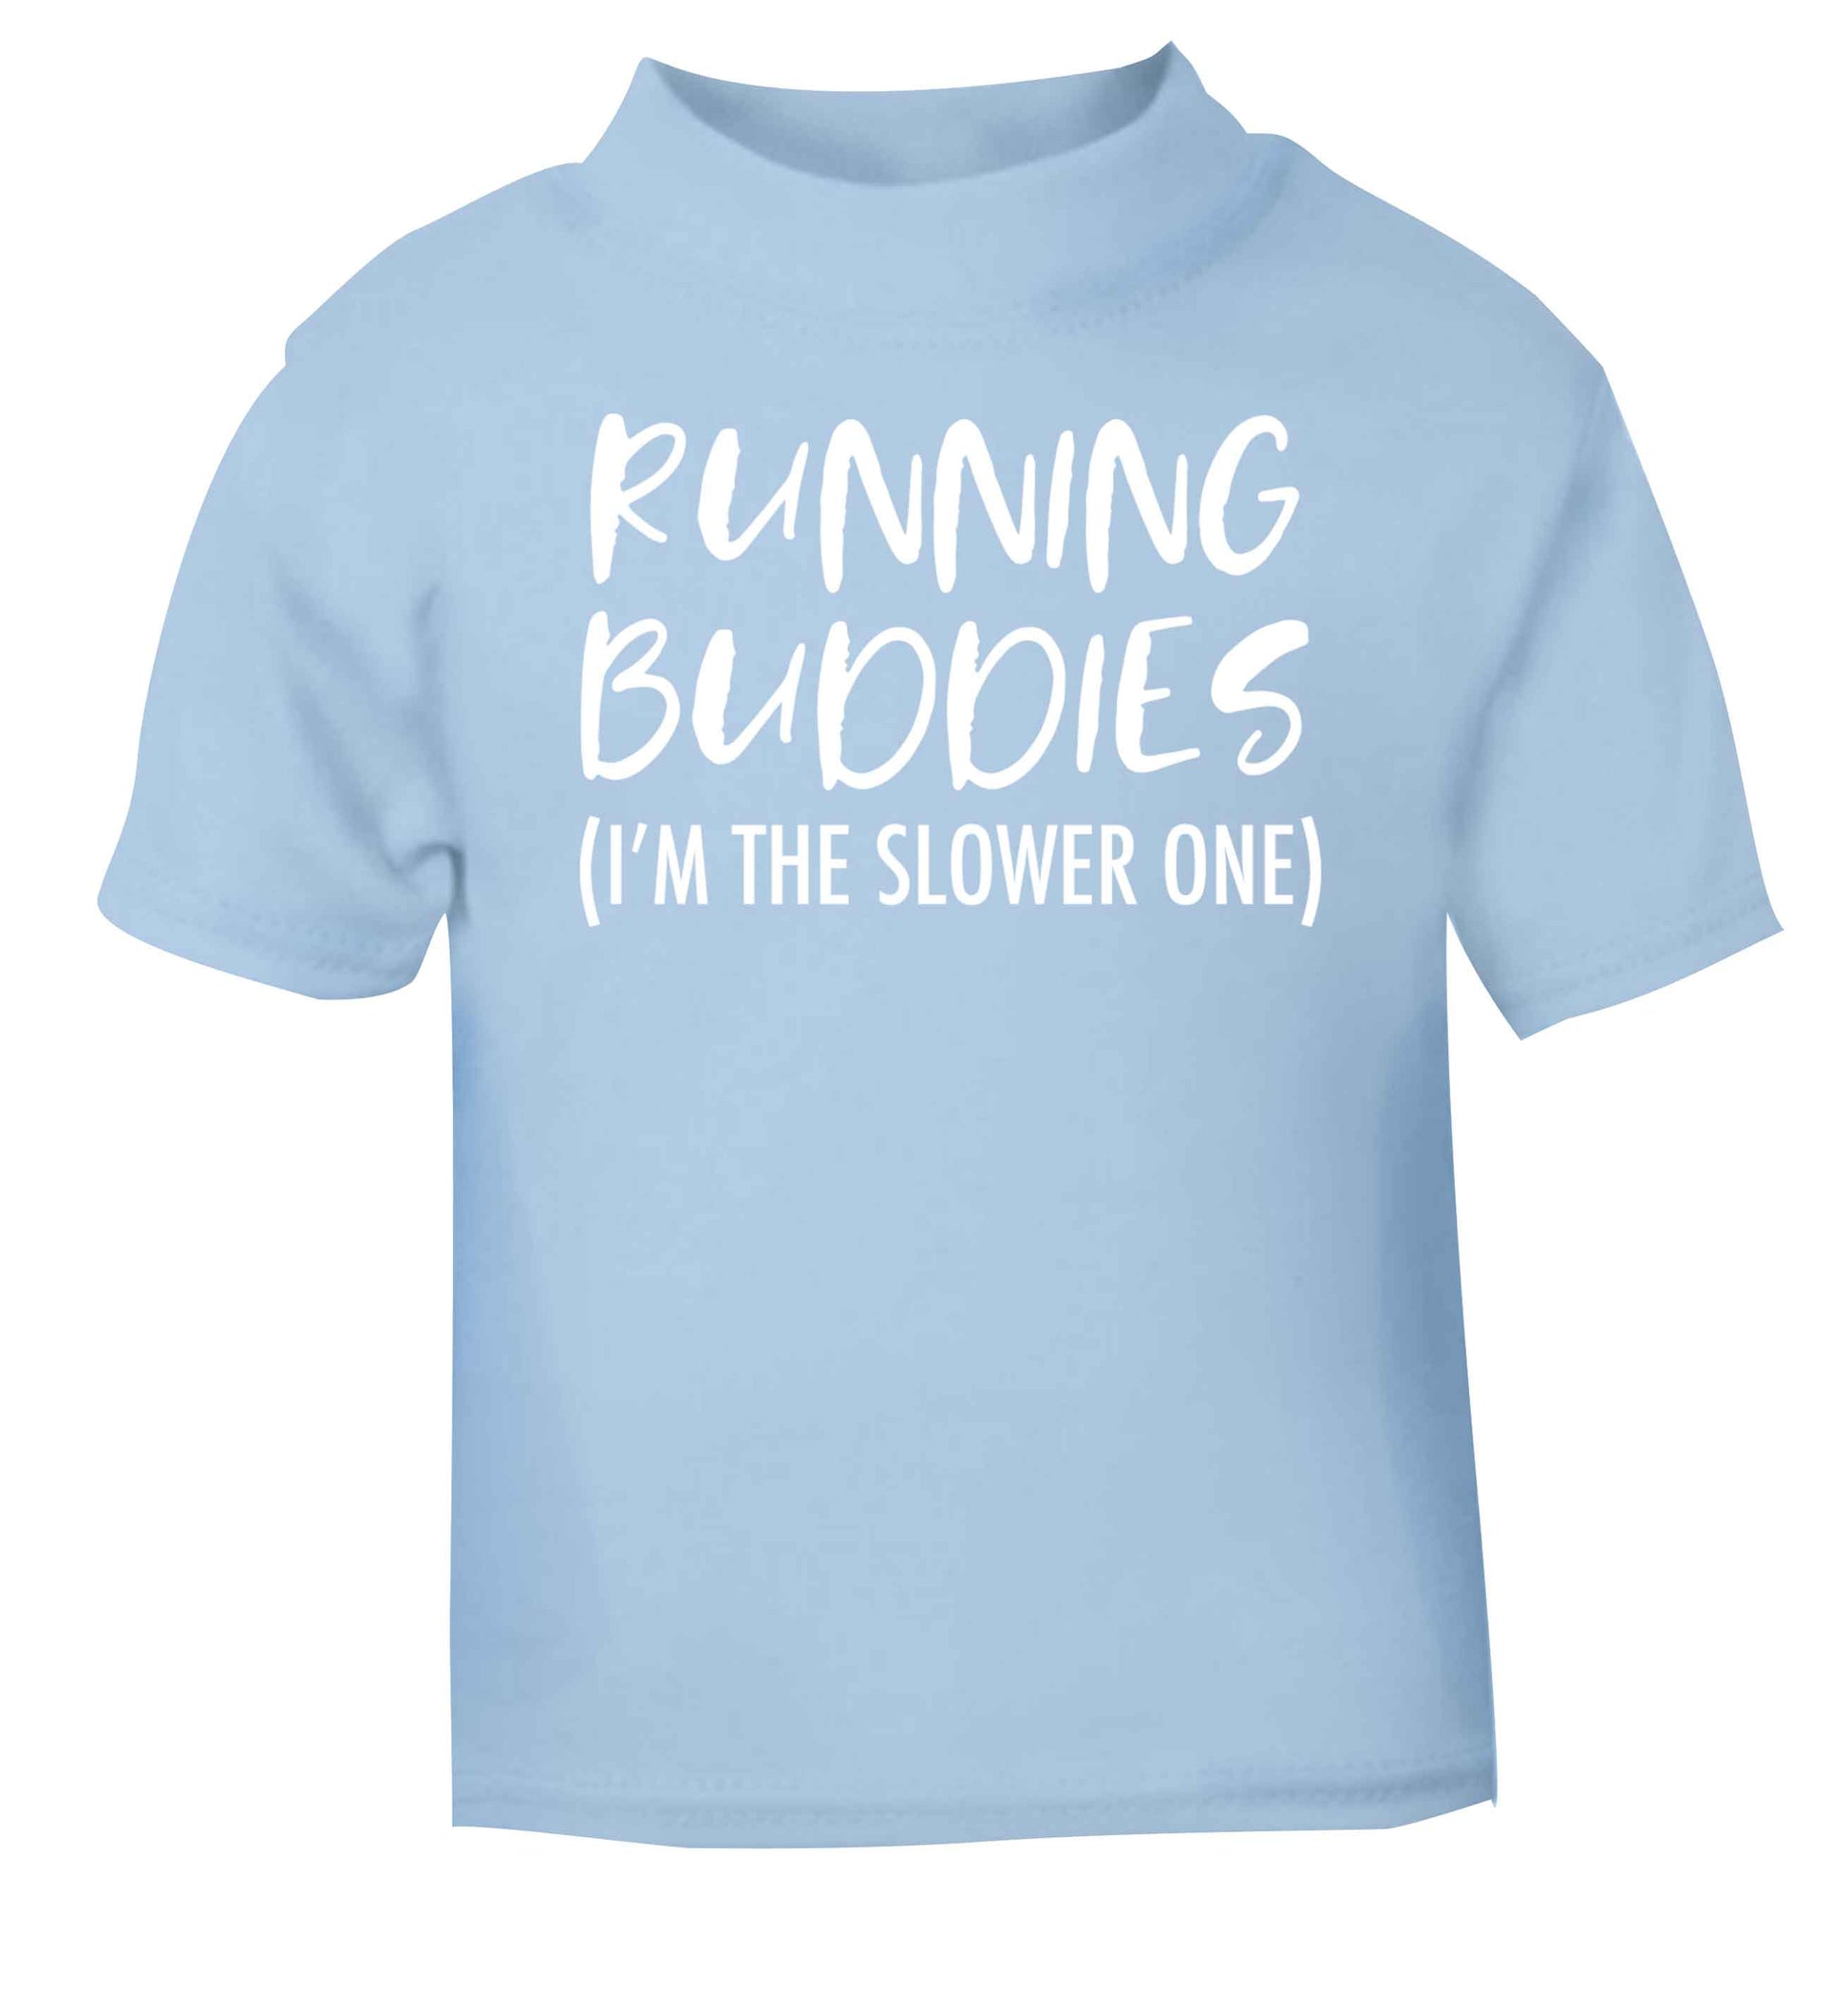 Running buddies (I'm the slower one) light blue baby toddler Tshirt 2 Years